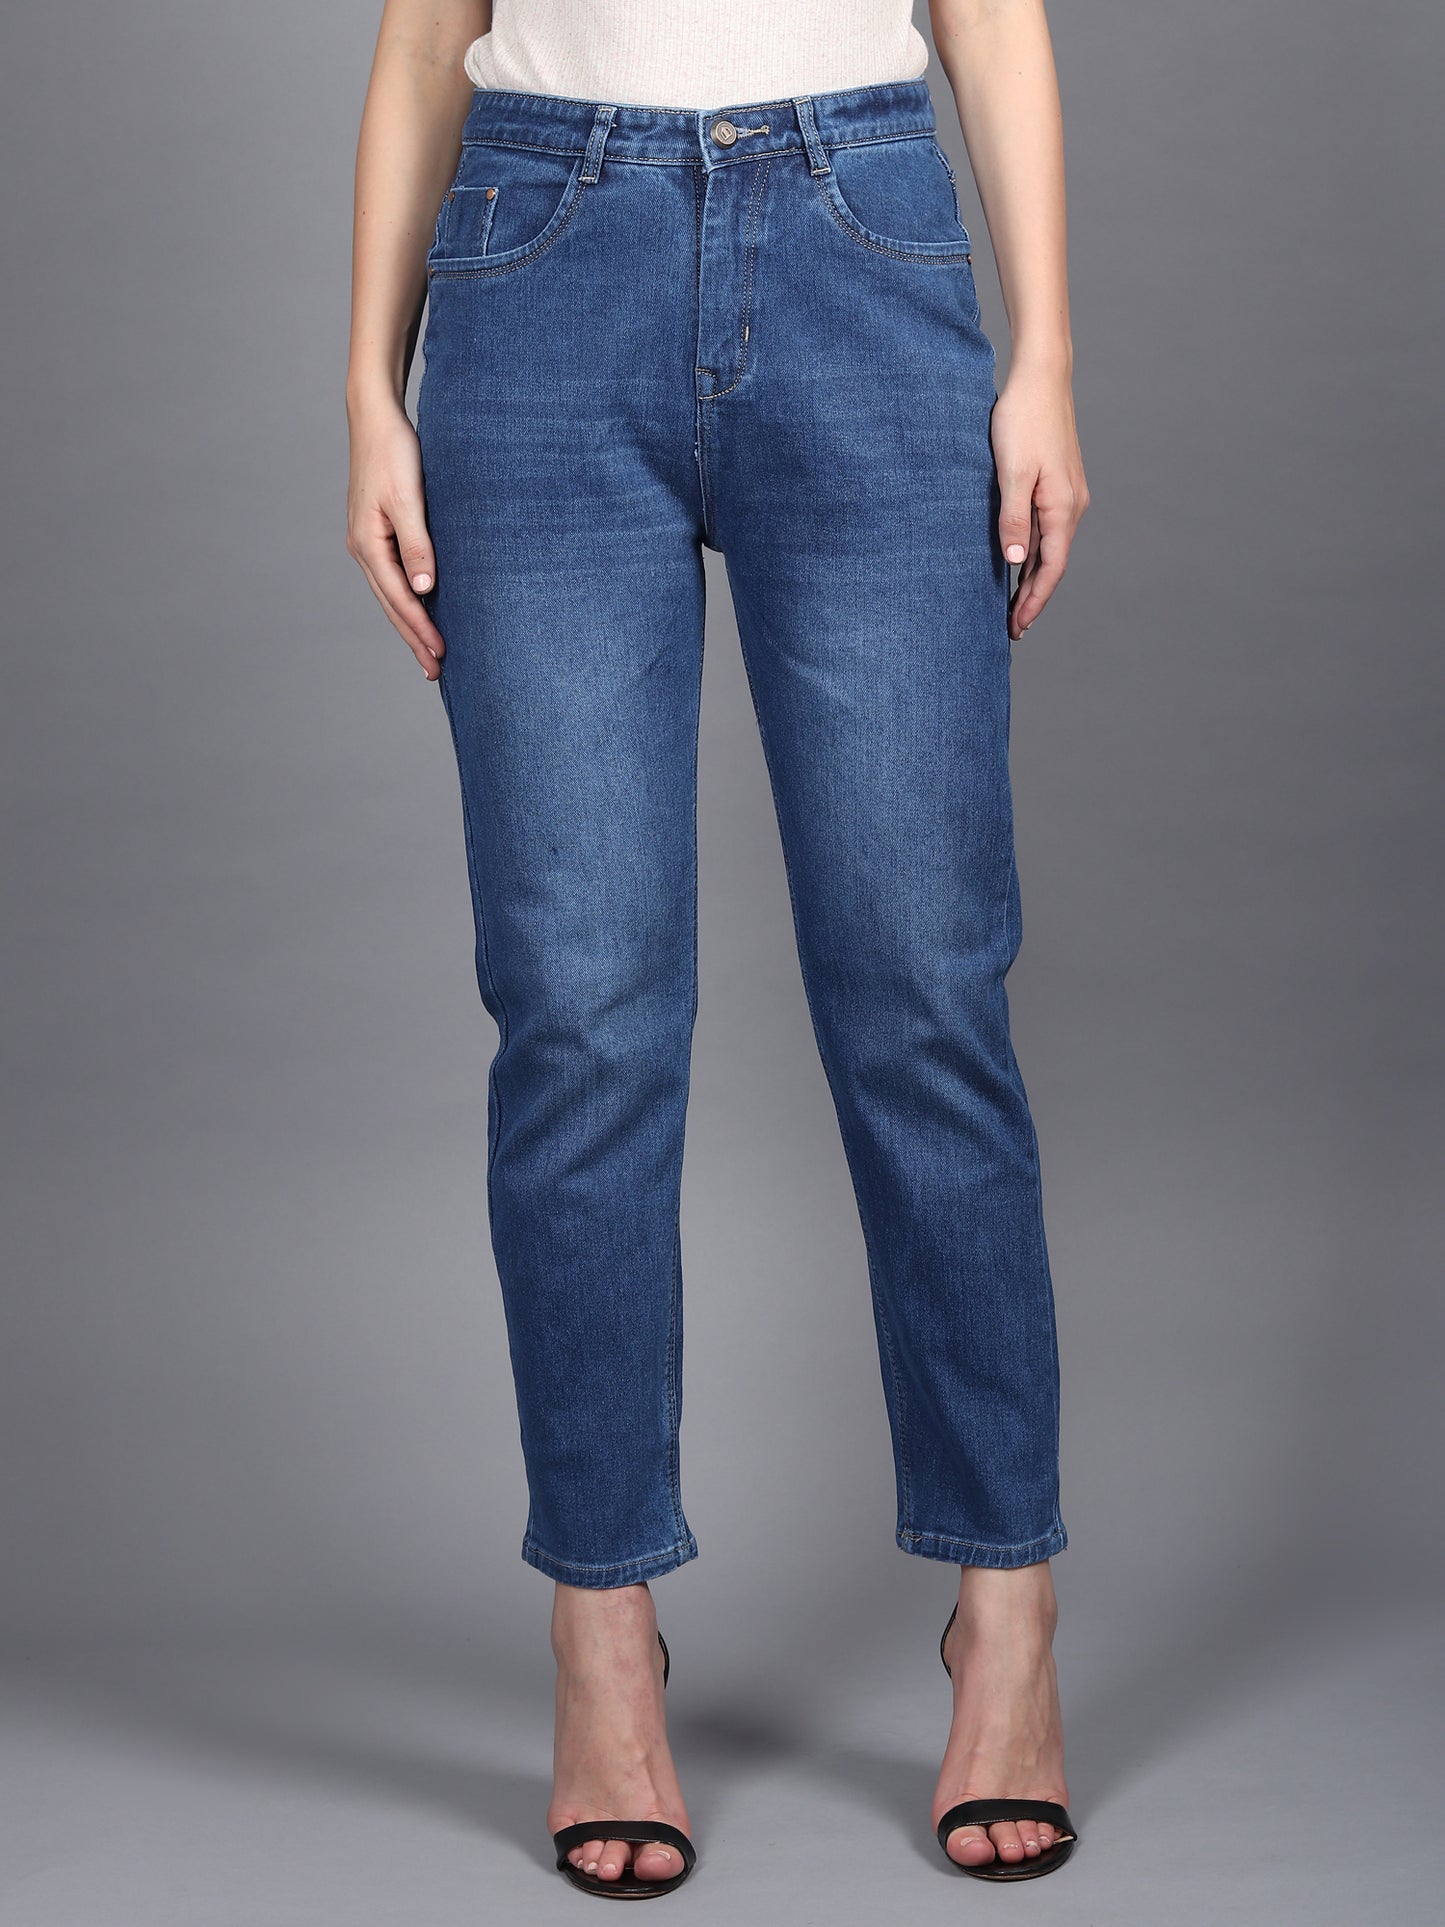 Blue Boyfriend Fit Cotton Lycra Regular Denim Jeans for Women-6041